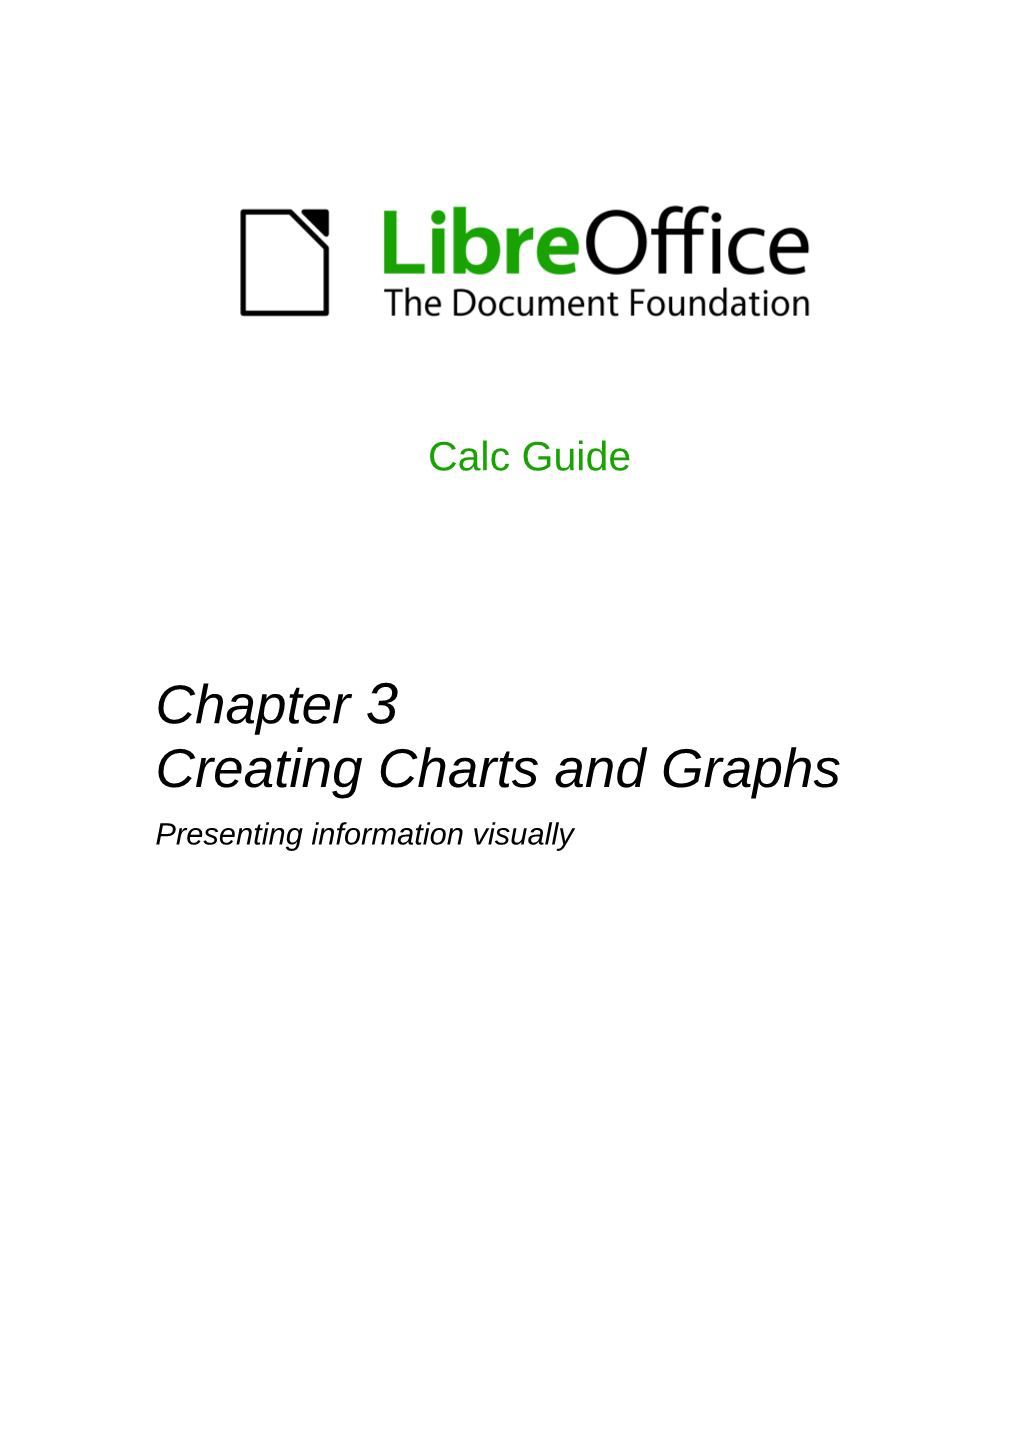 Creating Charts and Graphs Presenting Information Visually Copyright